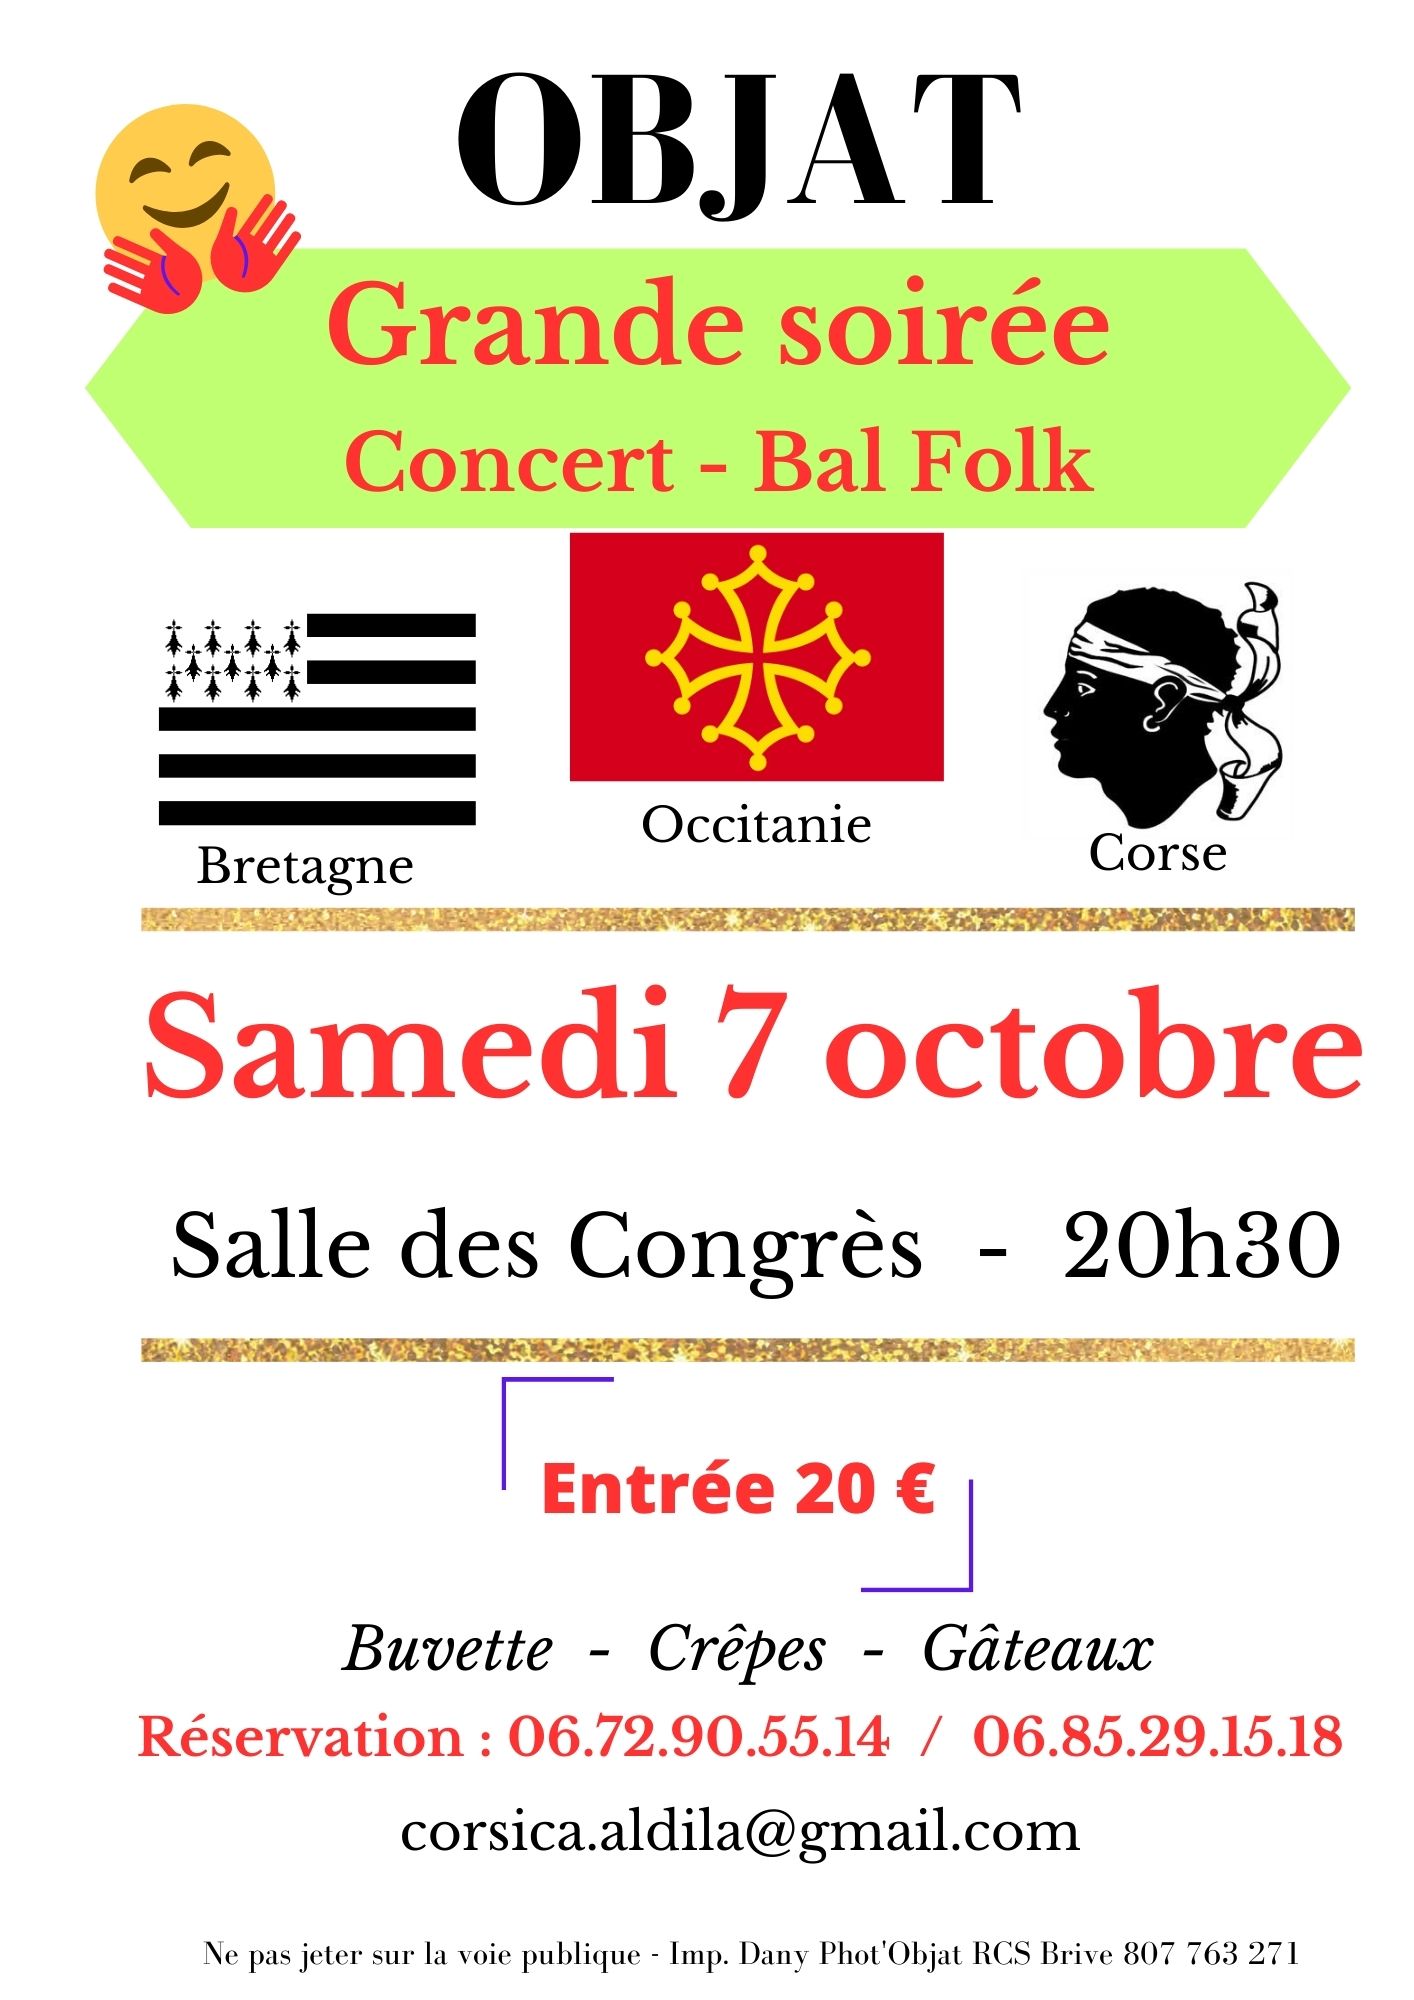 Grande soirée concert / Bal folk Corse Bretagne Limousin